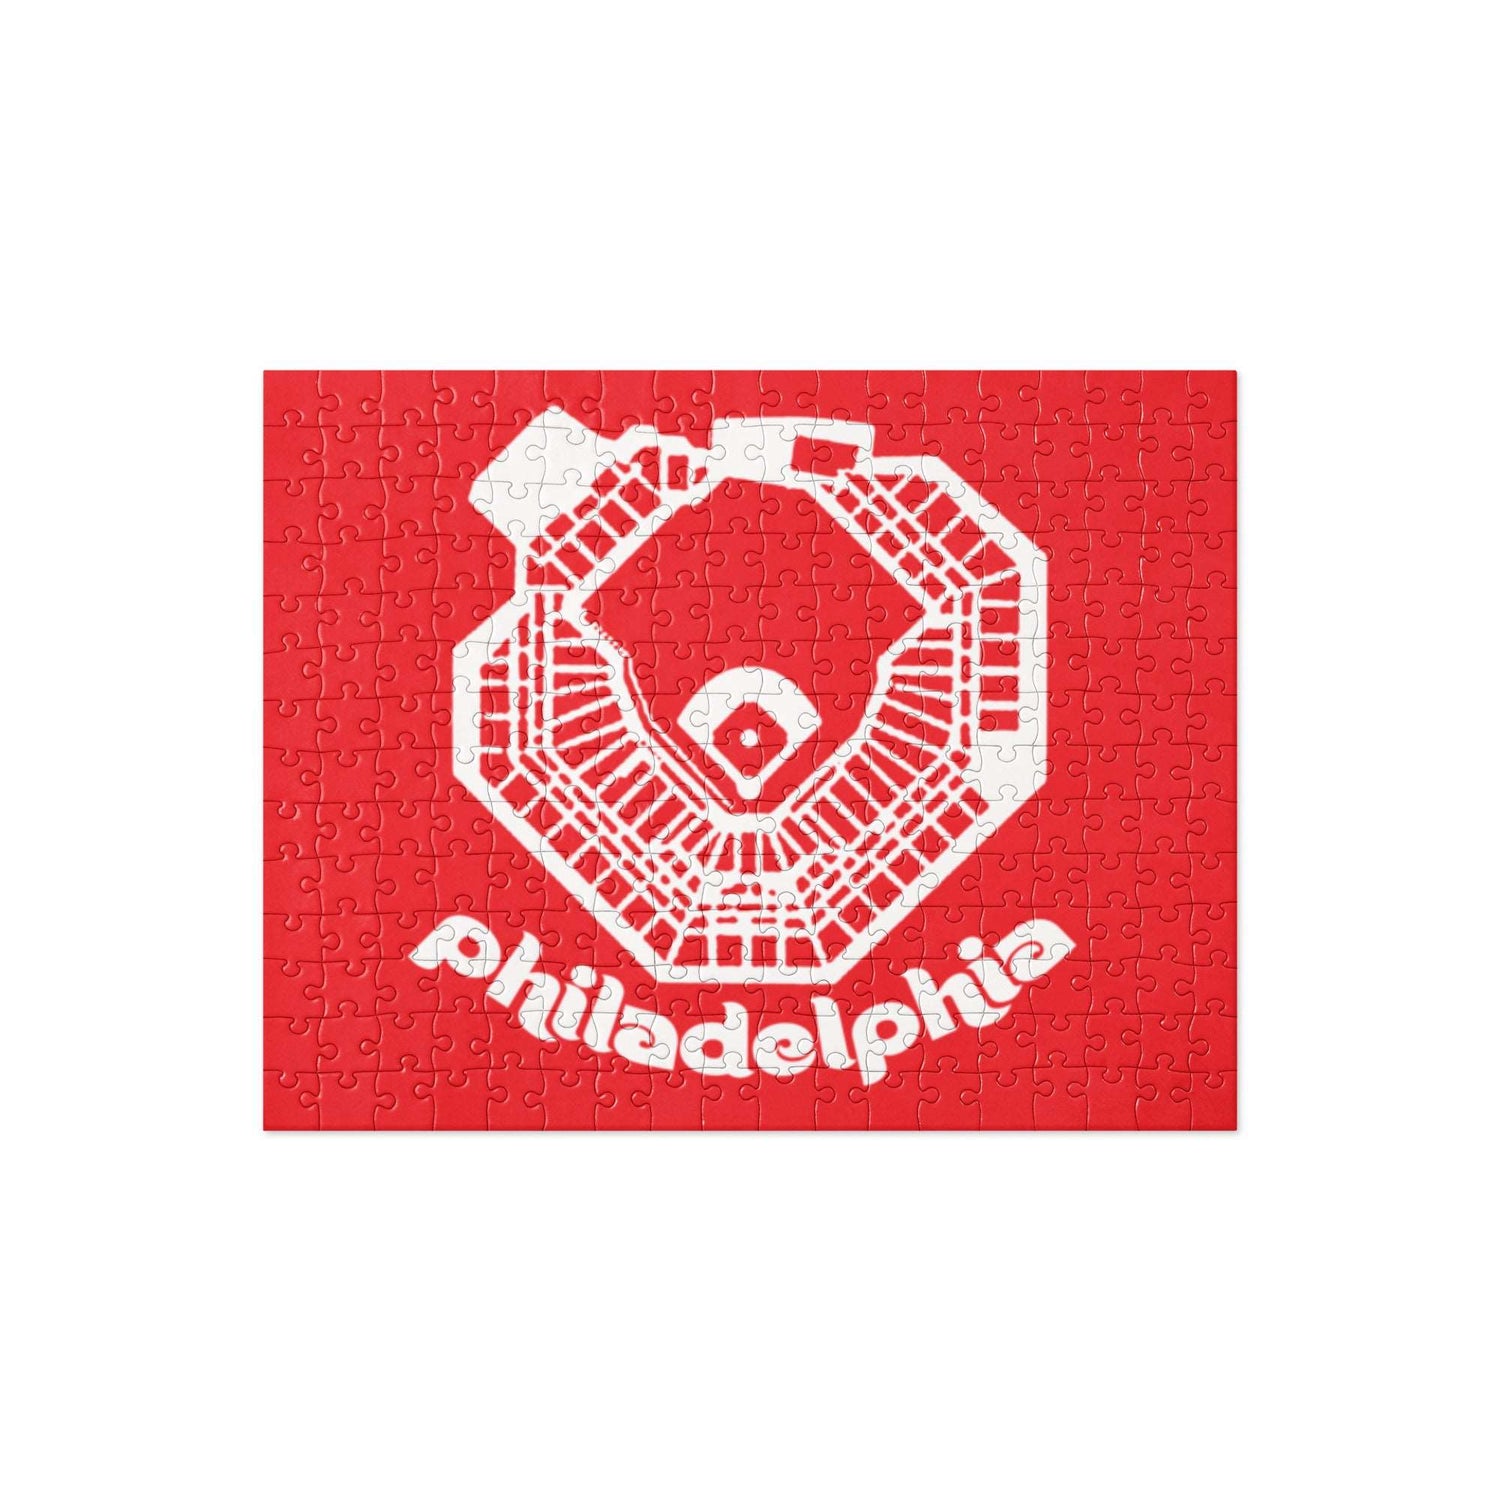 Philadelphia Ballpark Puzzle